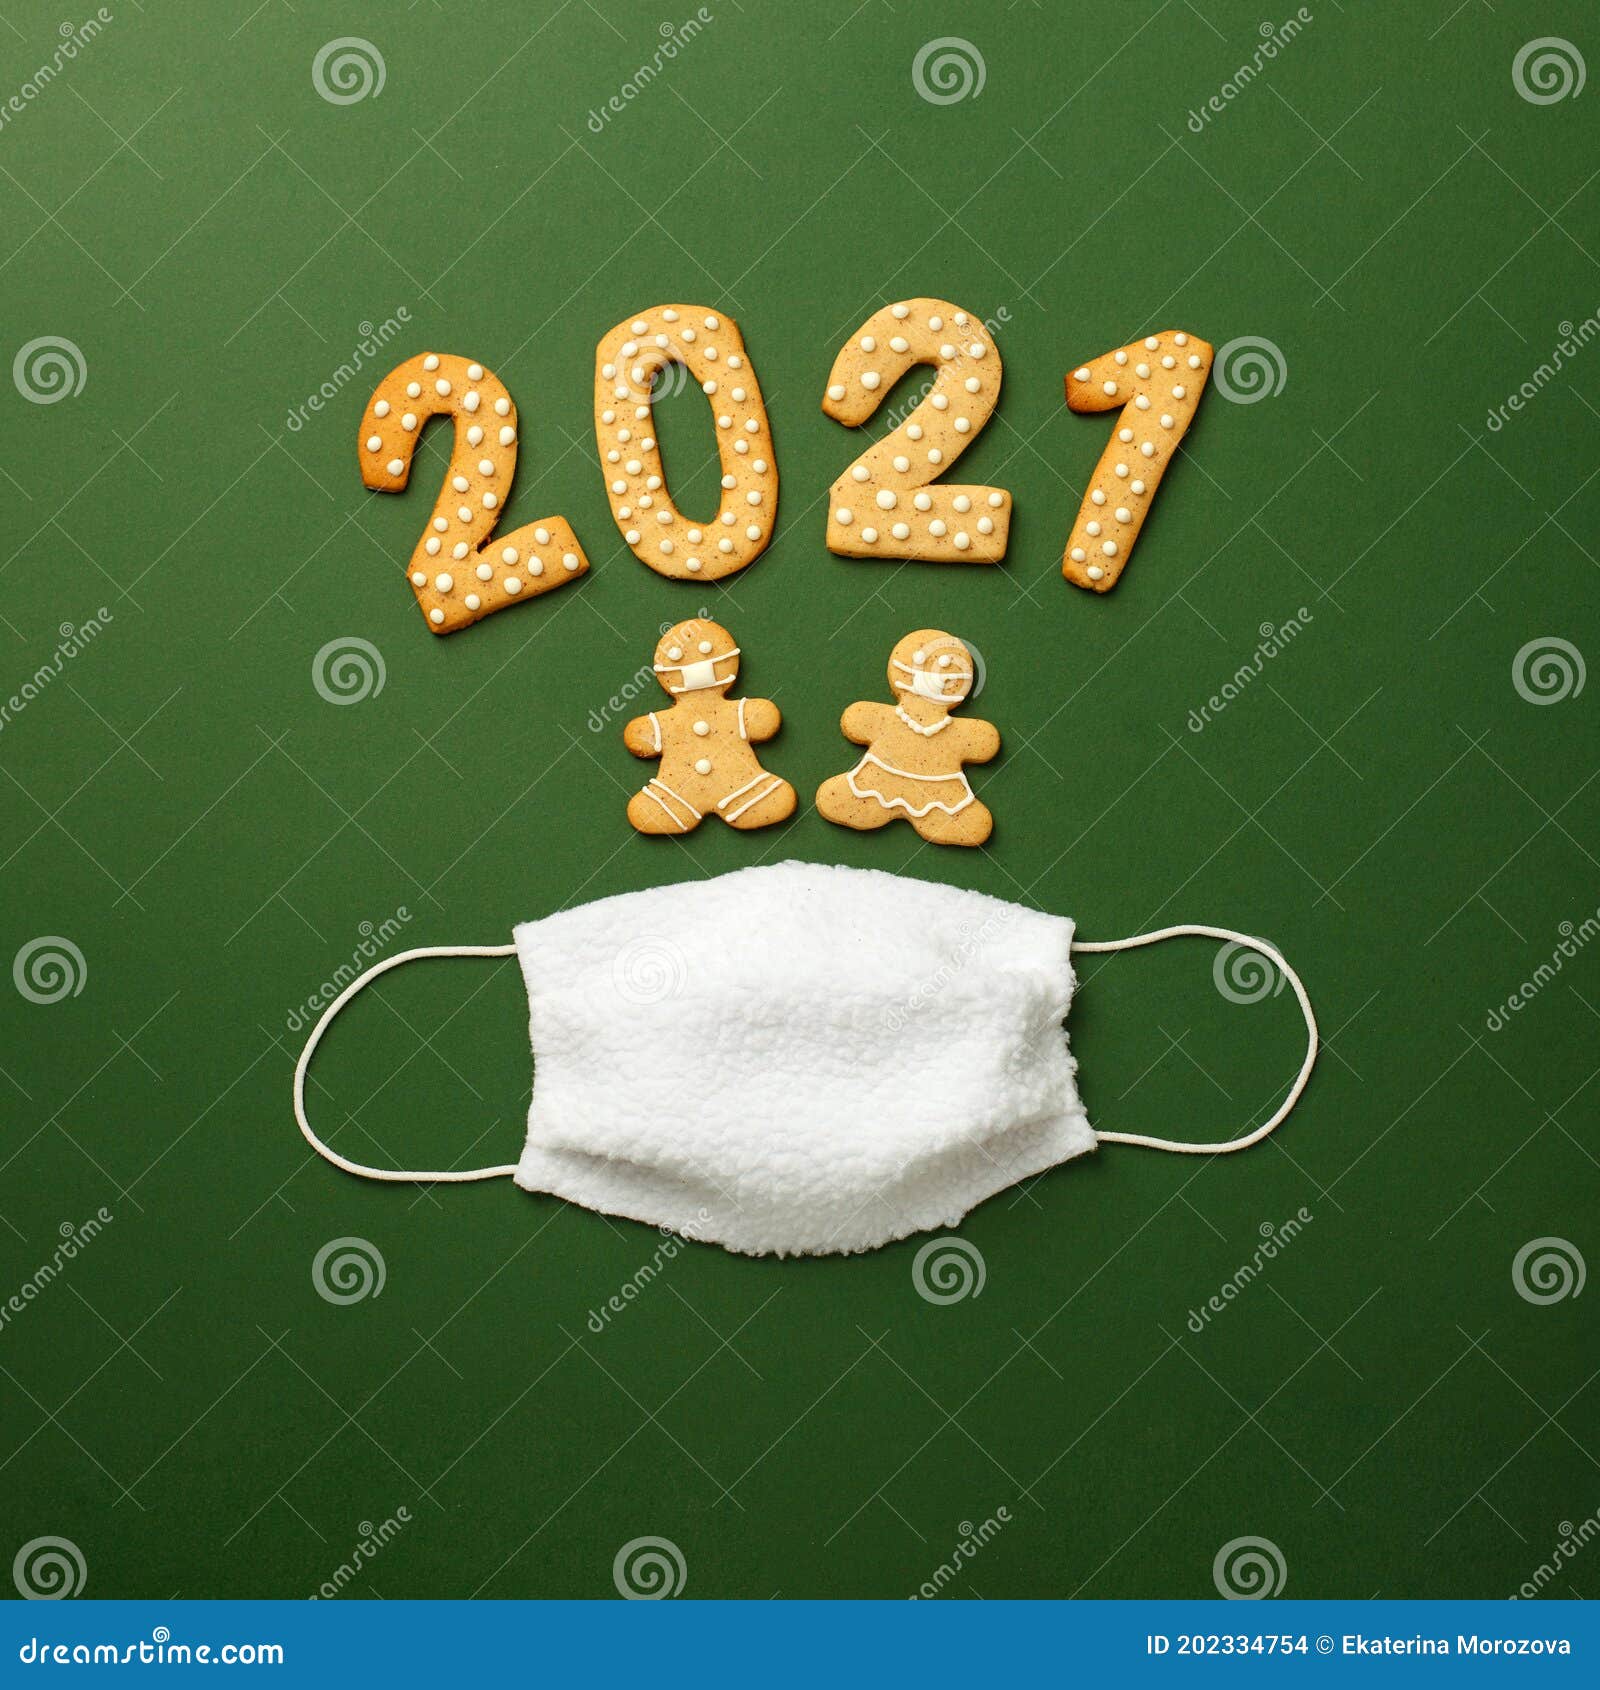 funny happy new year 2021